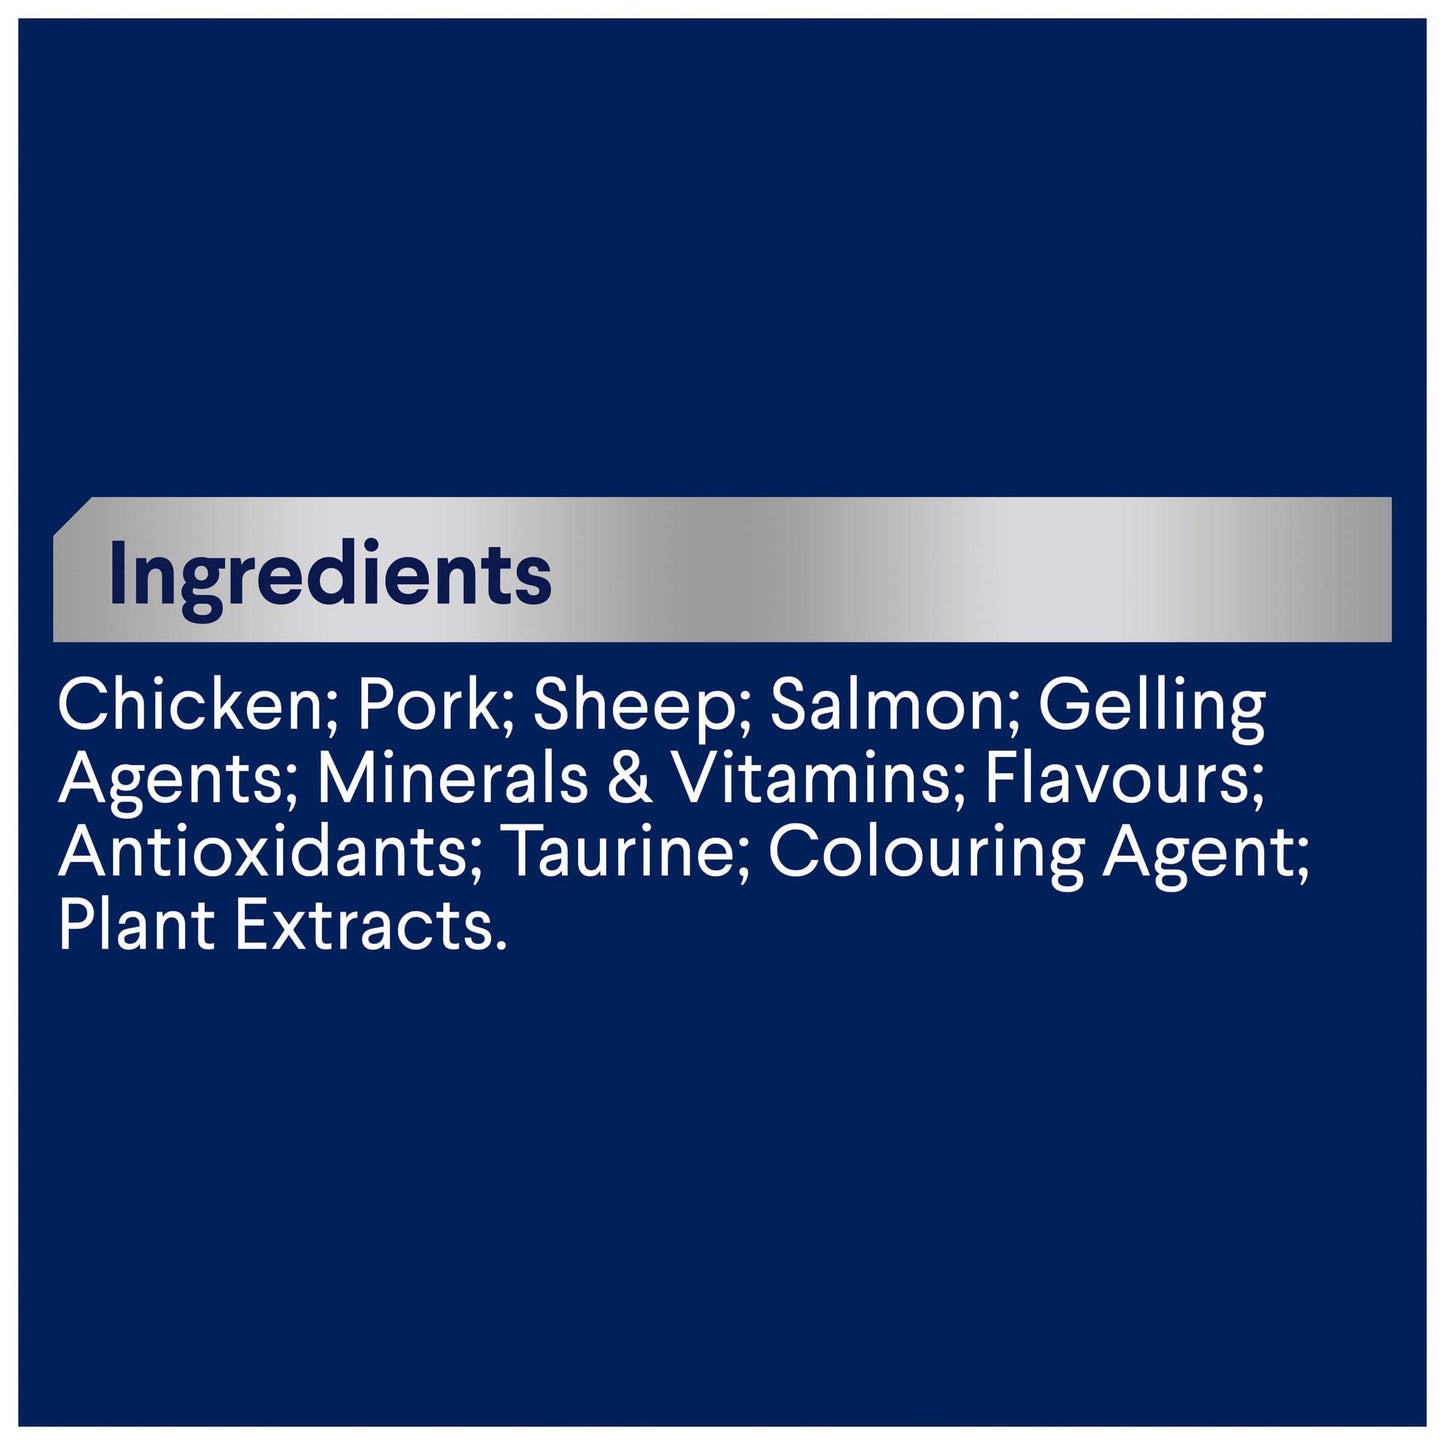 Advance Adult Chicken & Salmon Medley Wet Cat Food 7X85g (100000037782) [default_color]